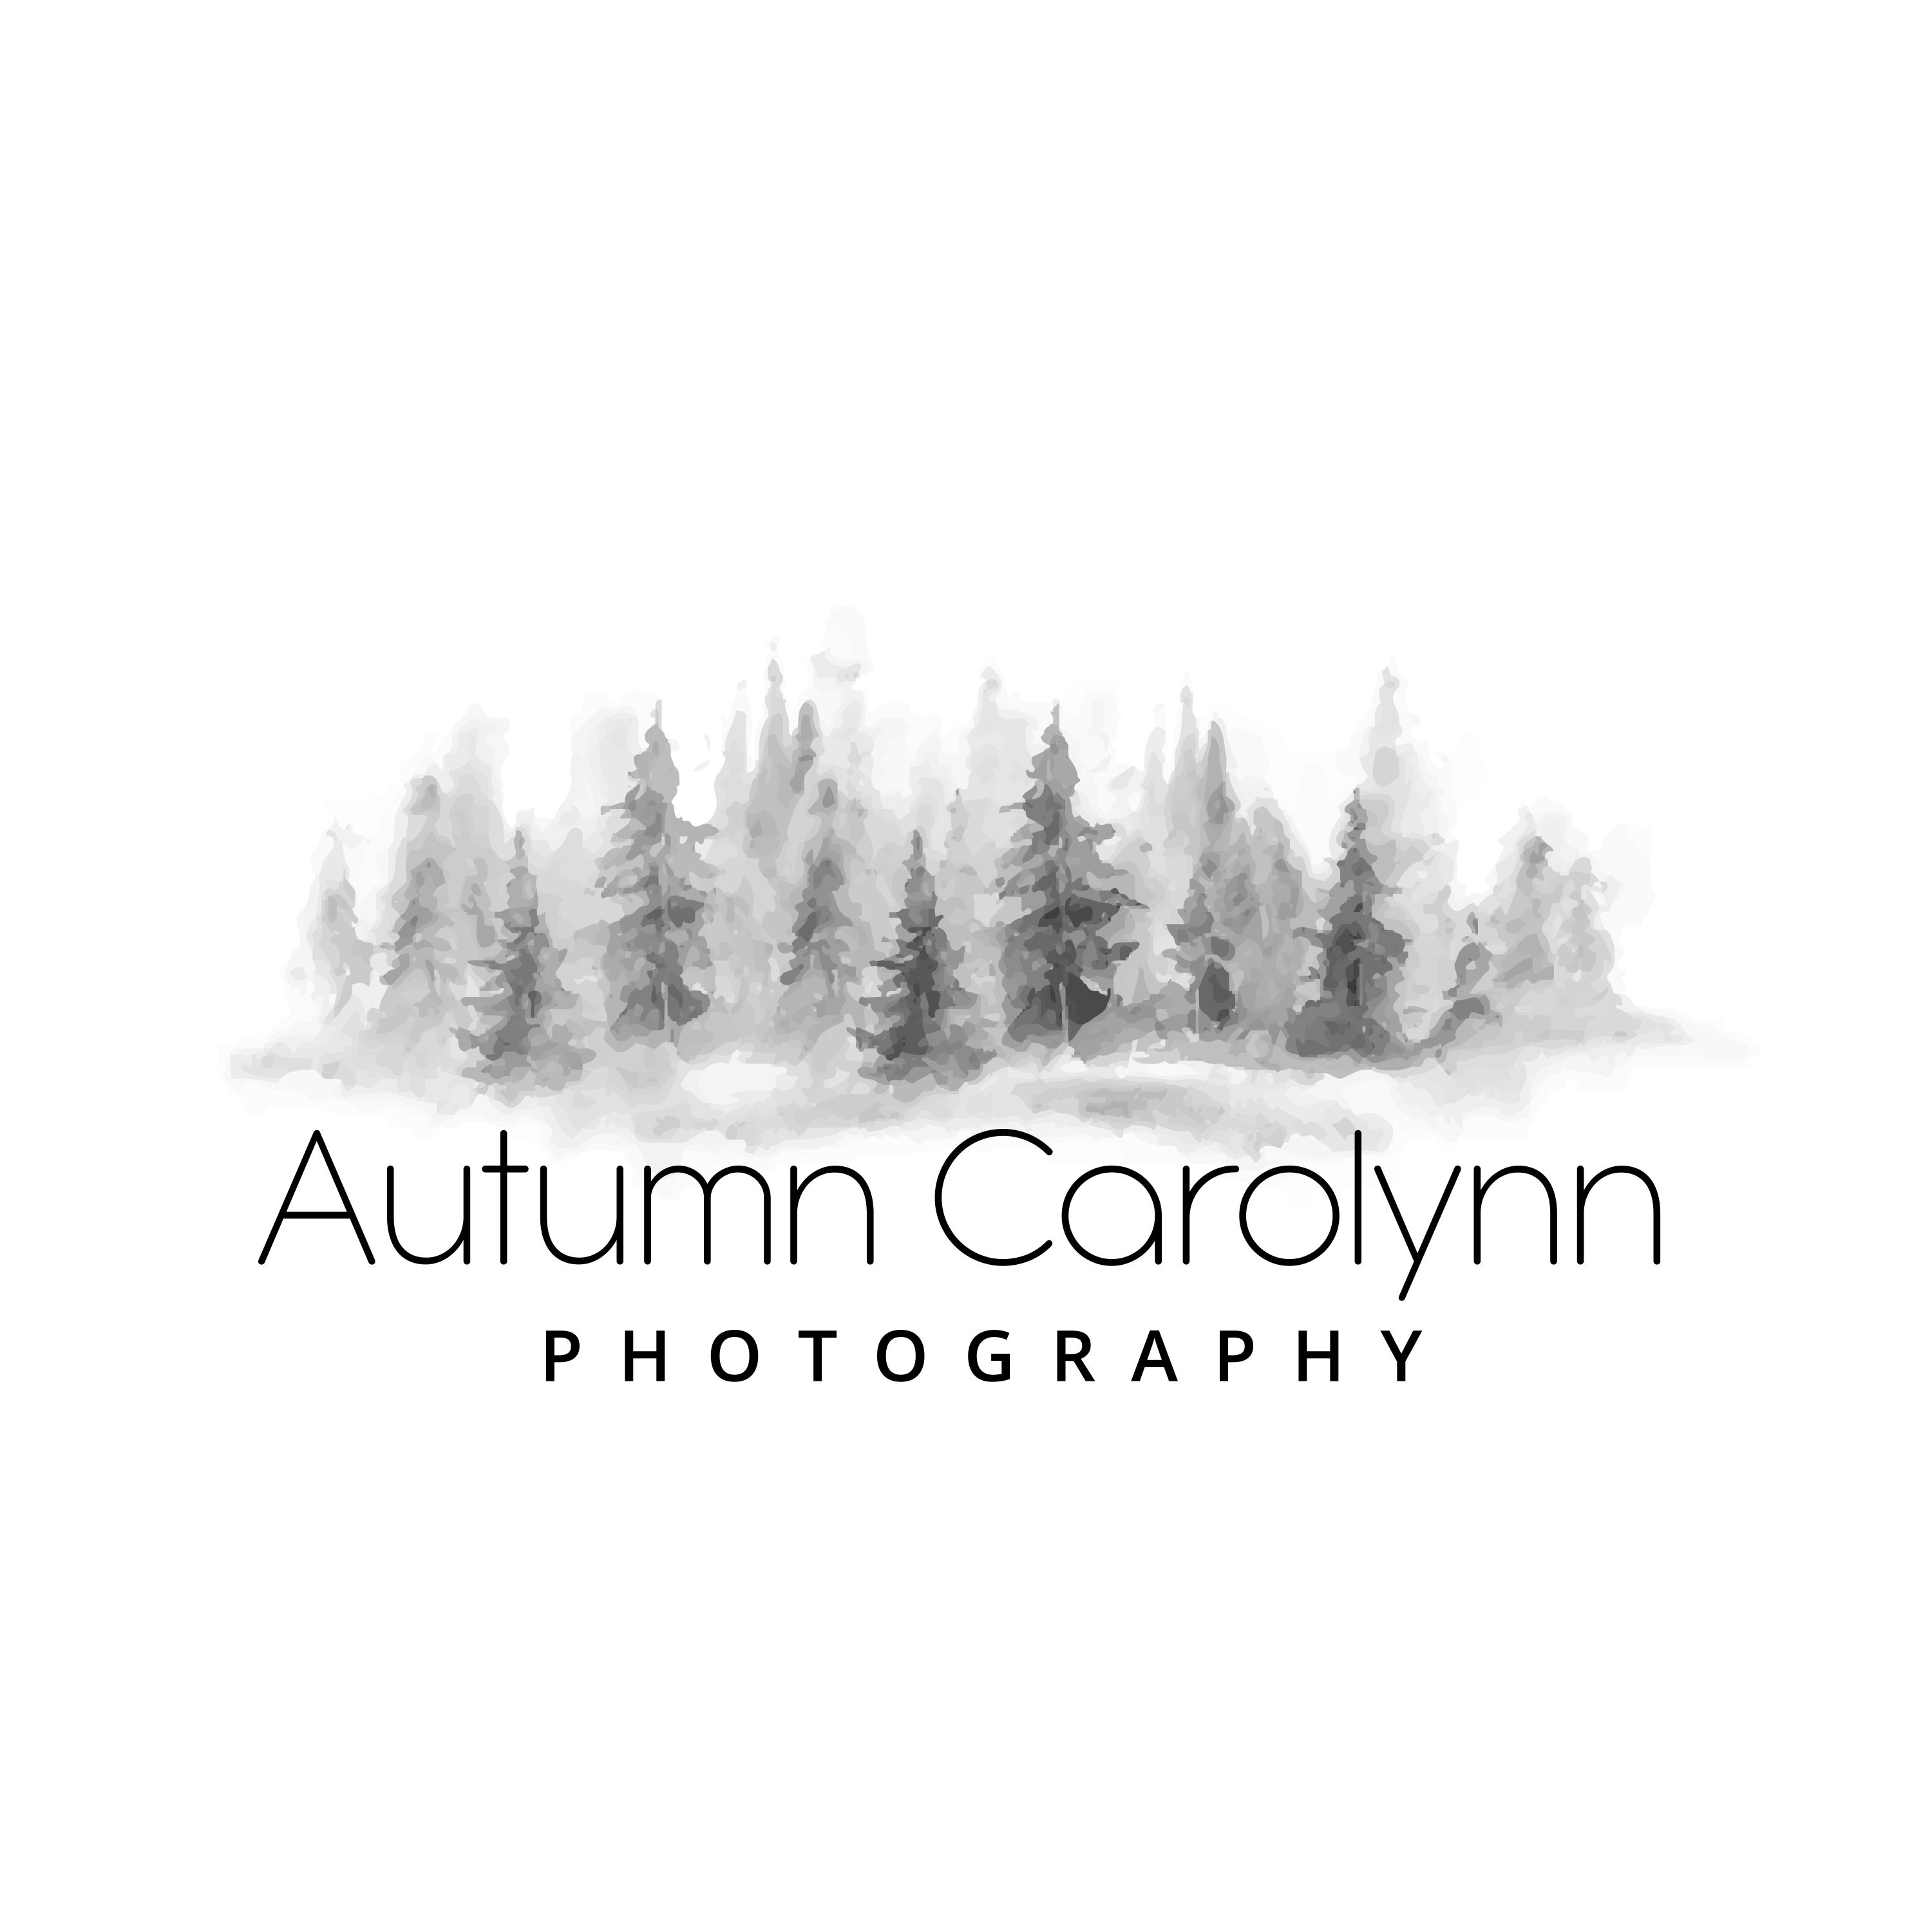 Autumn Carolynn